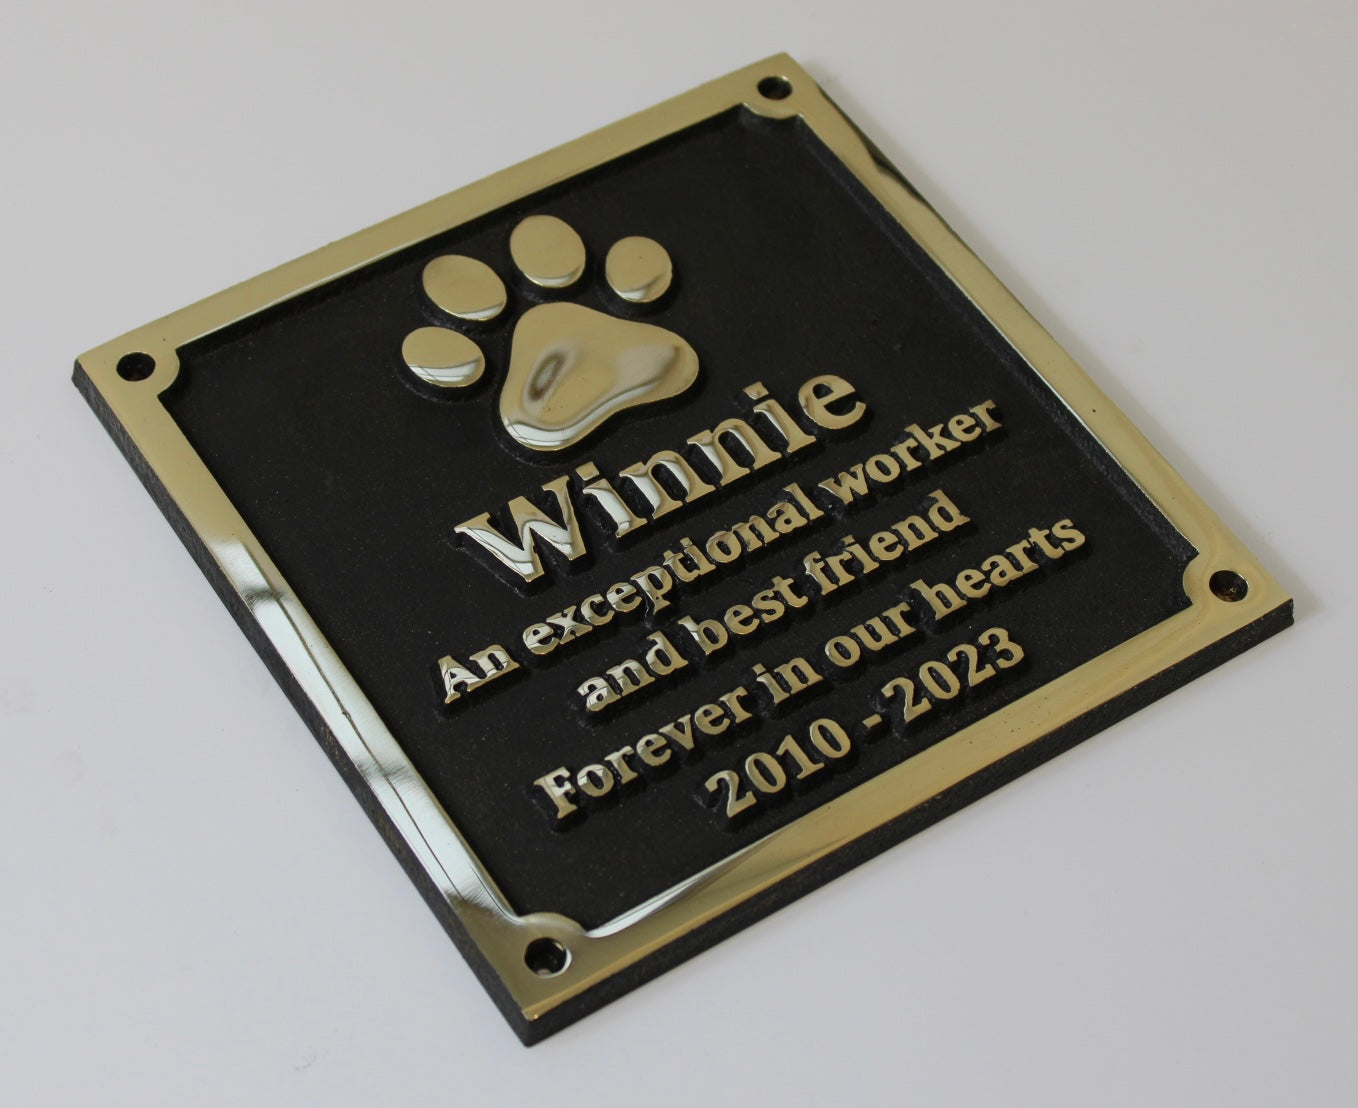 Memorial Plaques in Bronze for pets